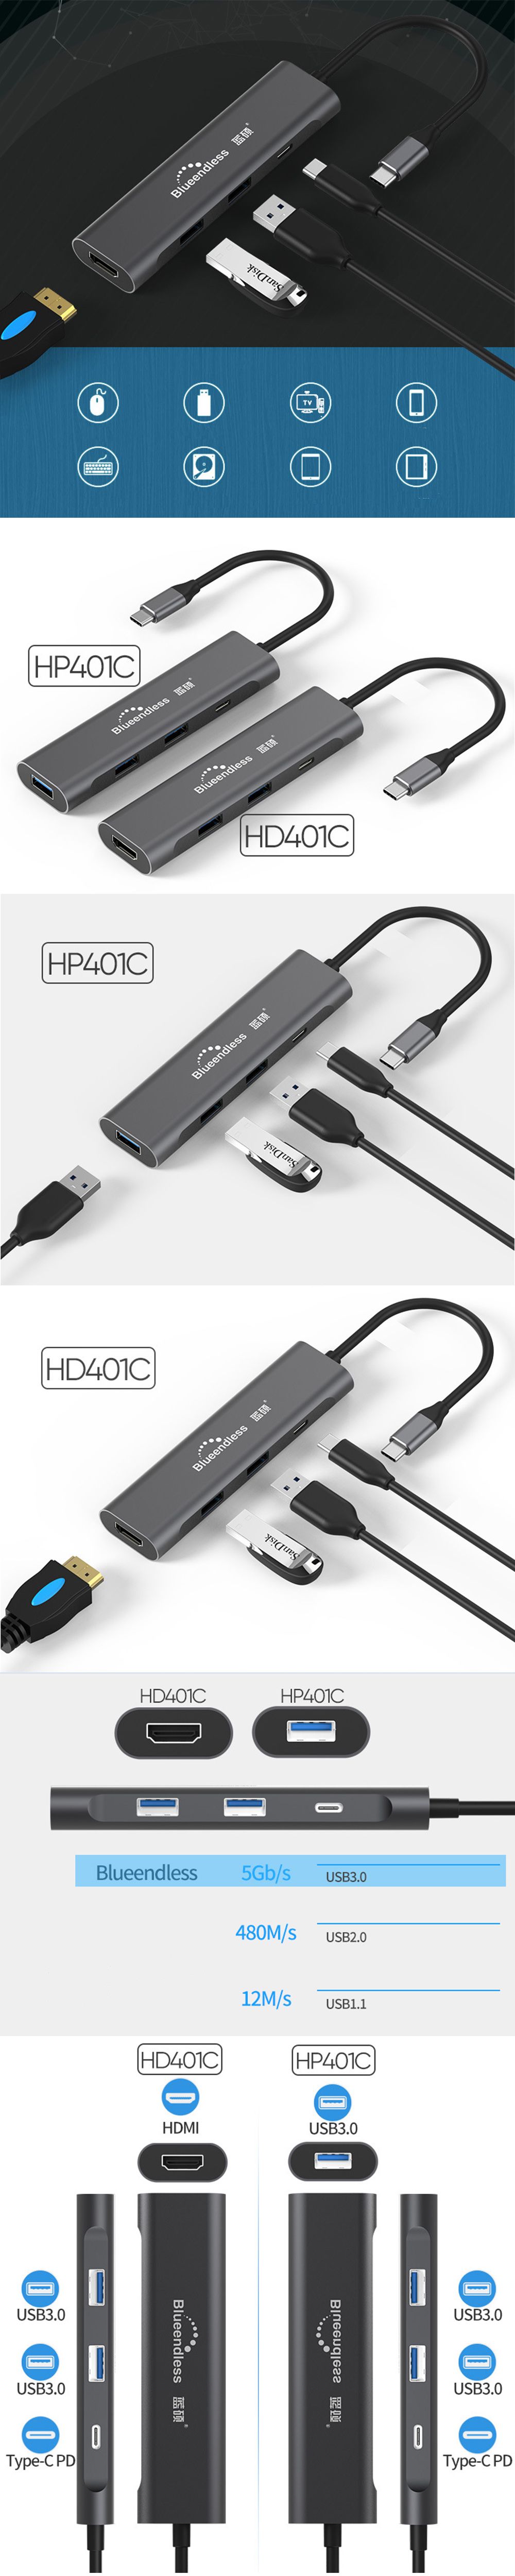 Blueendless-HD401HP401-Type-C-Data-USB-Hub-with-3-Port-USB30-PD-Charging-4K-Display-HD-Converter-Ada-1559804